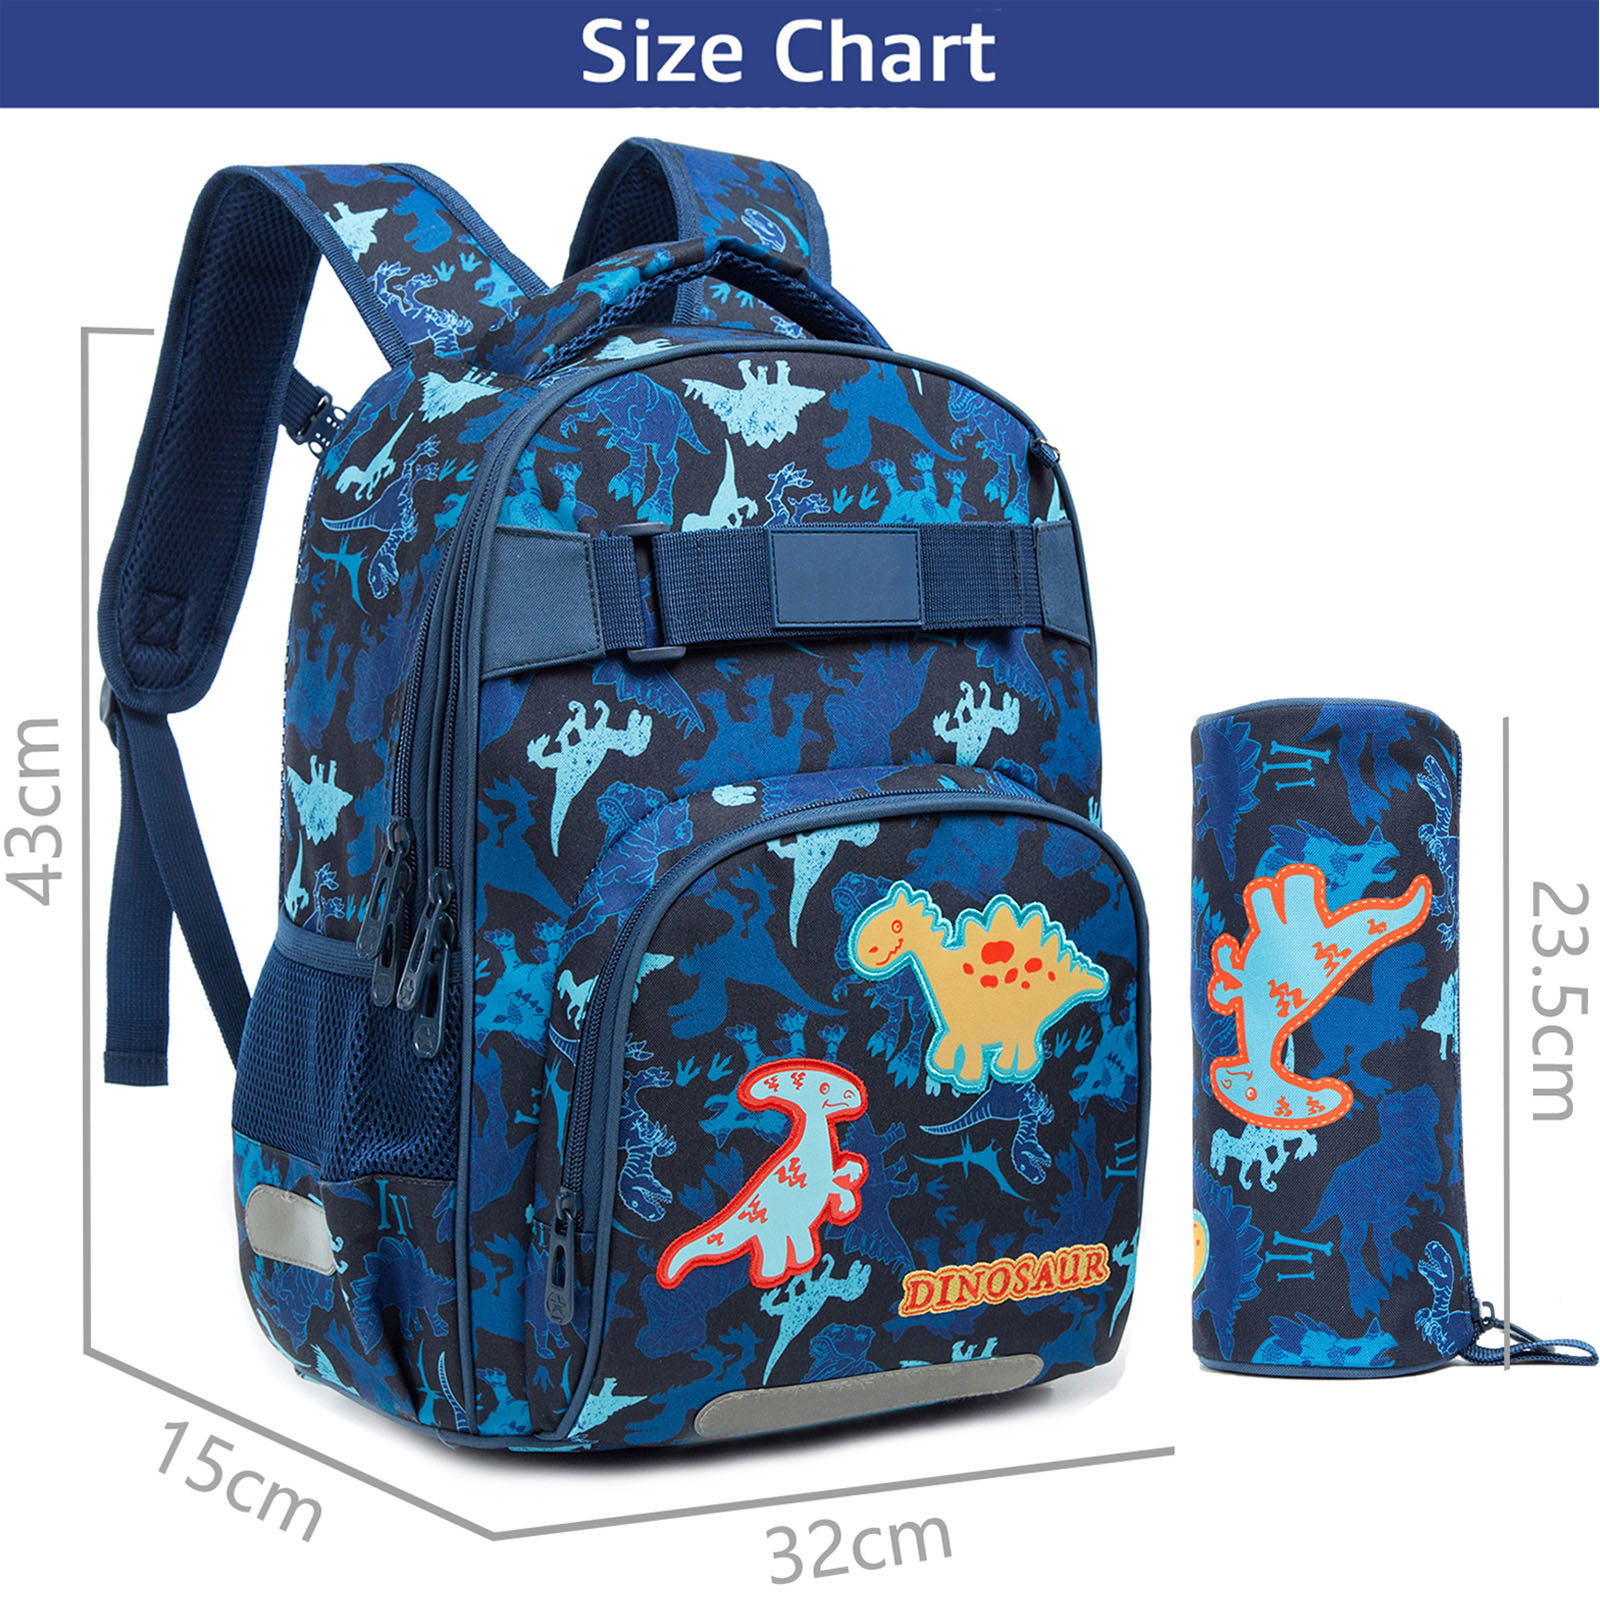 lvyH Kids School Backpack Unicorn Dinosaur Waterproof Schoolbag with Pencil Case Boys Girls Travel Outdoor,Blue - image 3 of 8